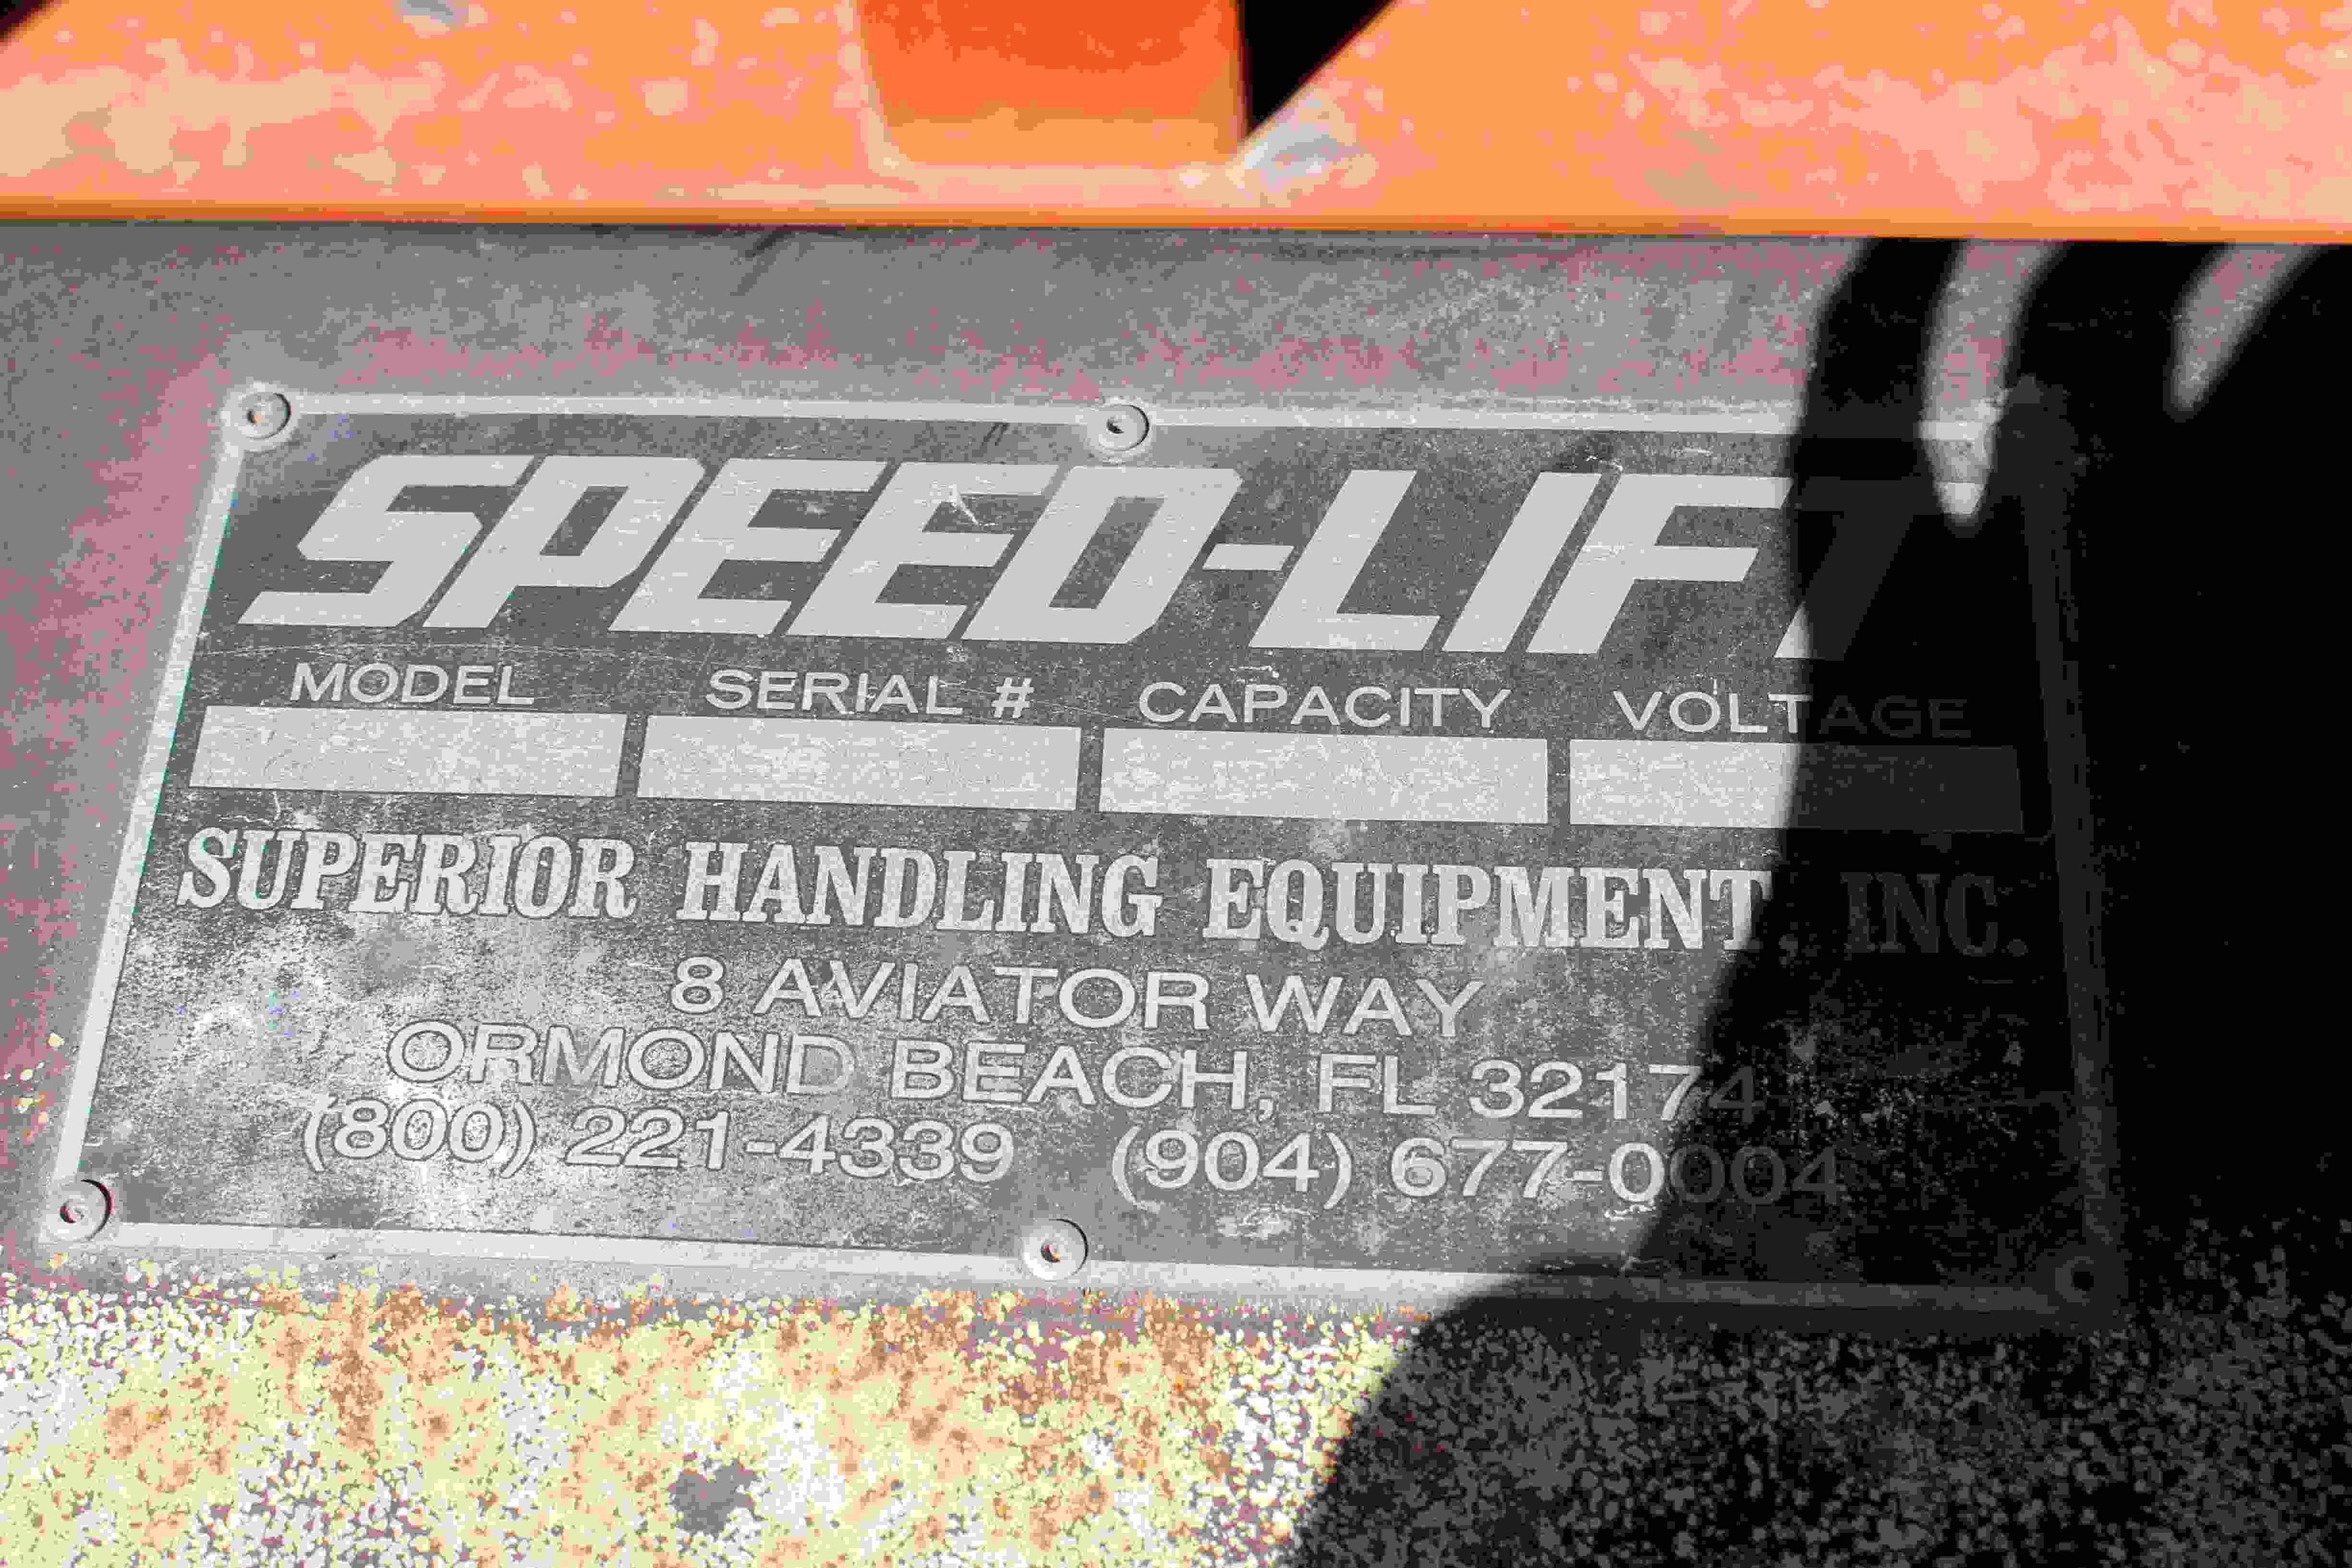 Speed-Lift SL-8000 Portable Dock Lift